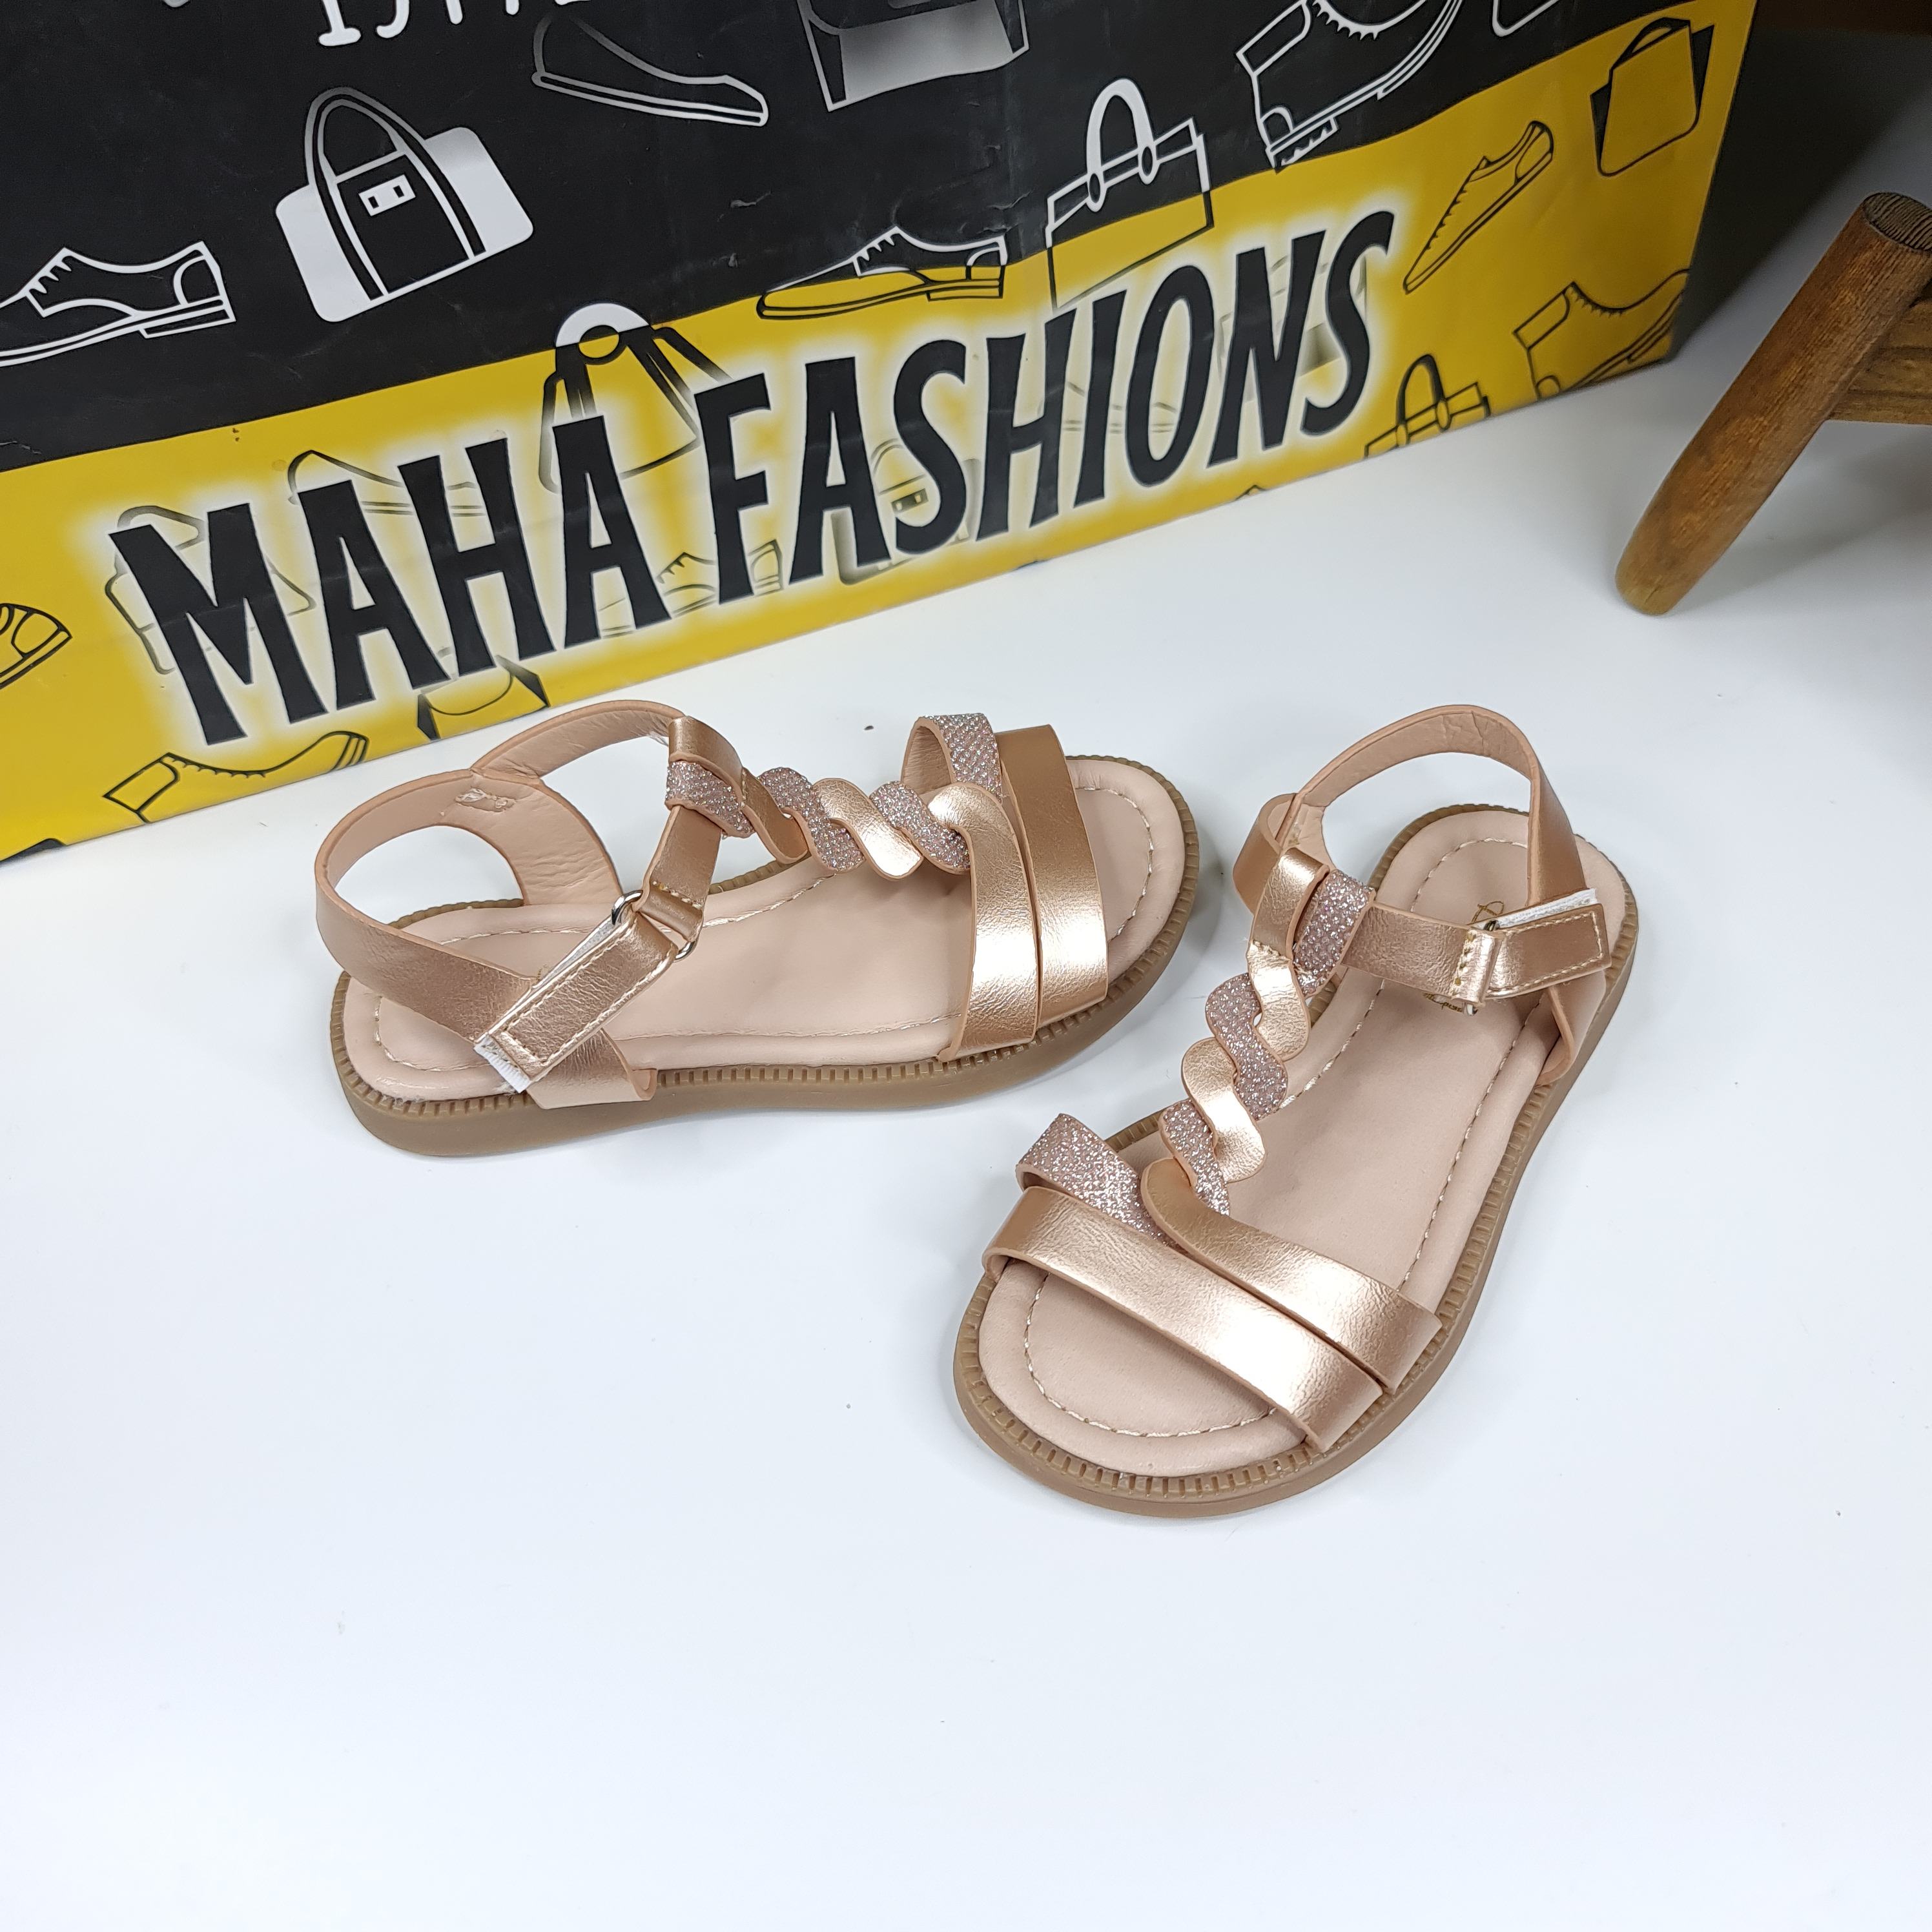 SMK-016 CHAMP GOLD - Maha fashions -  